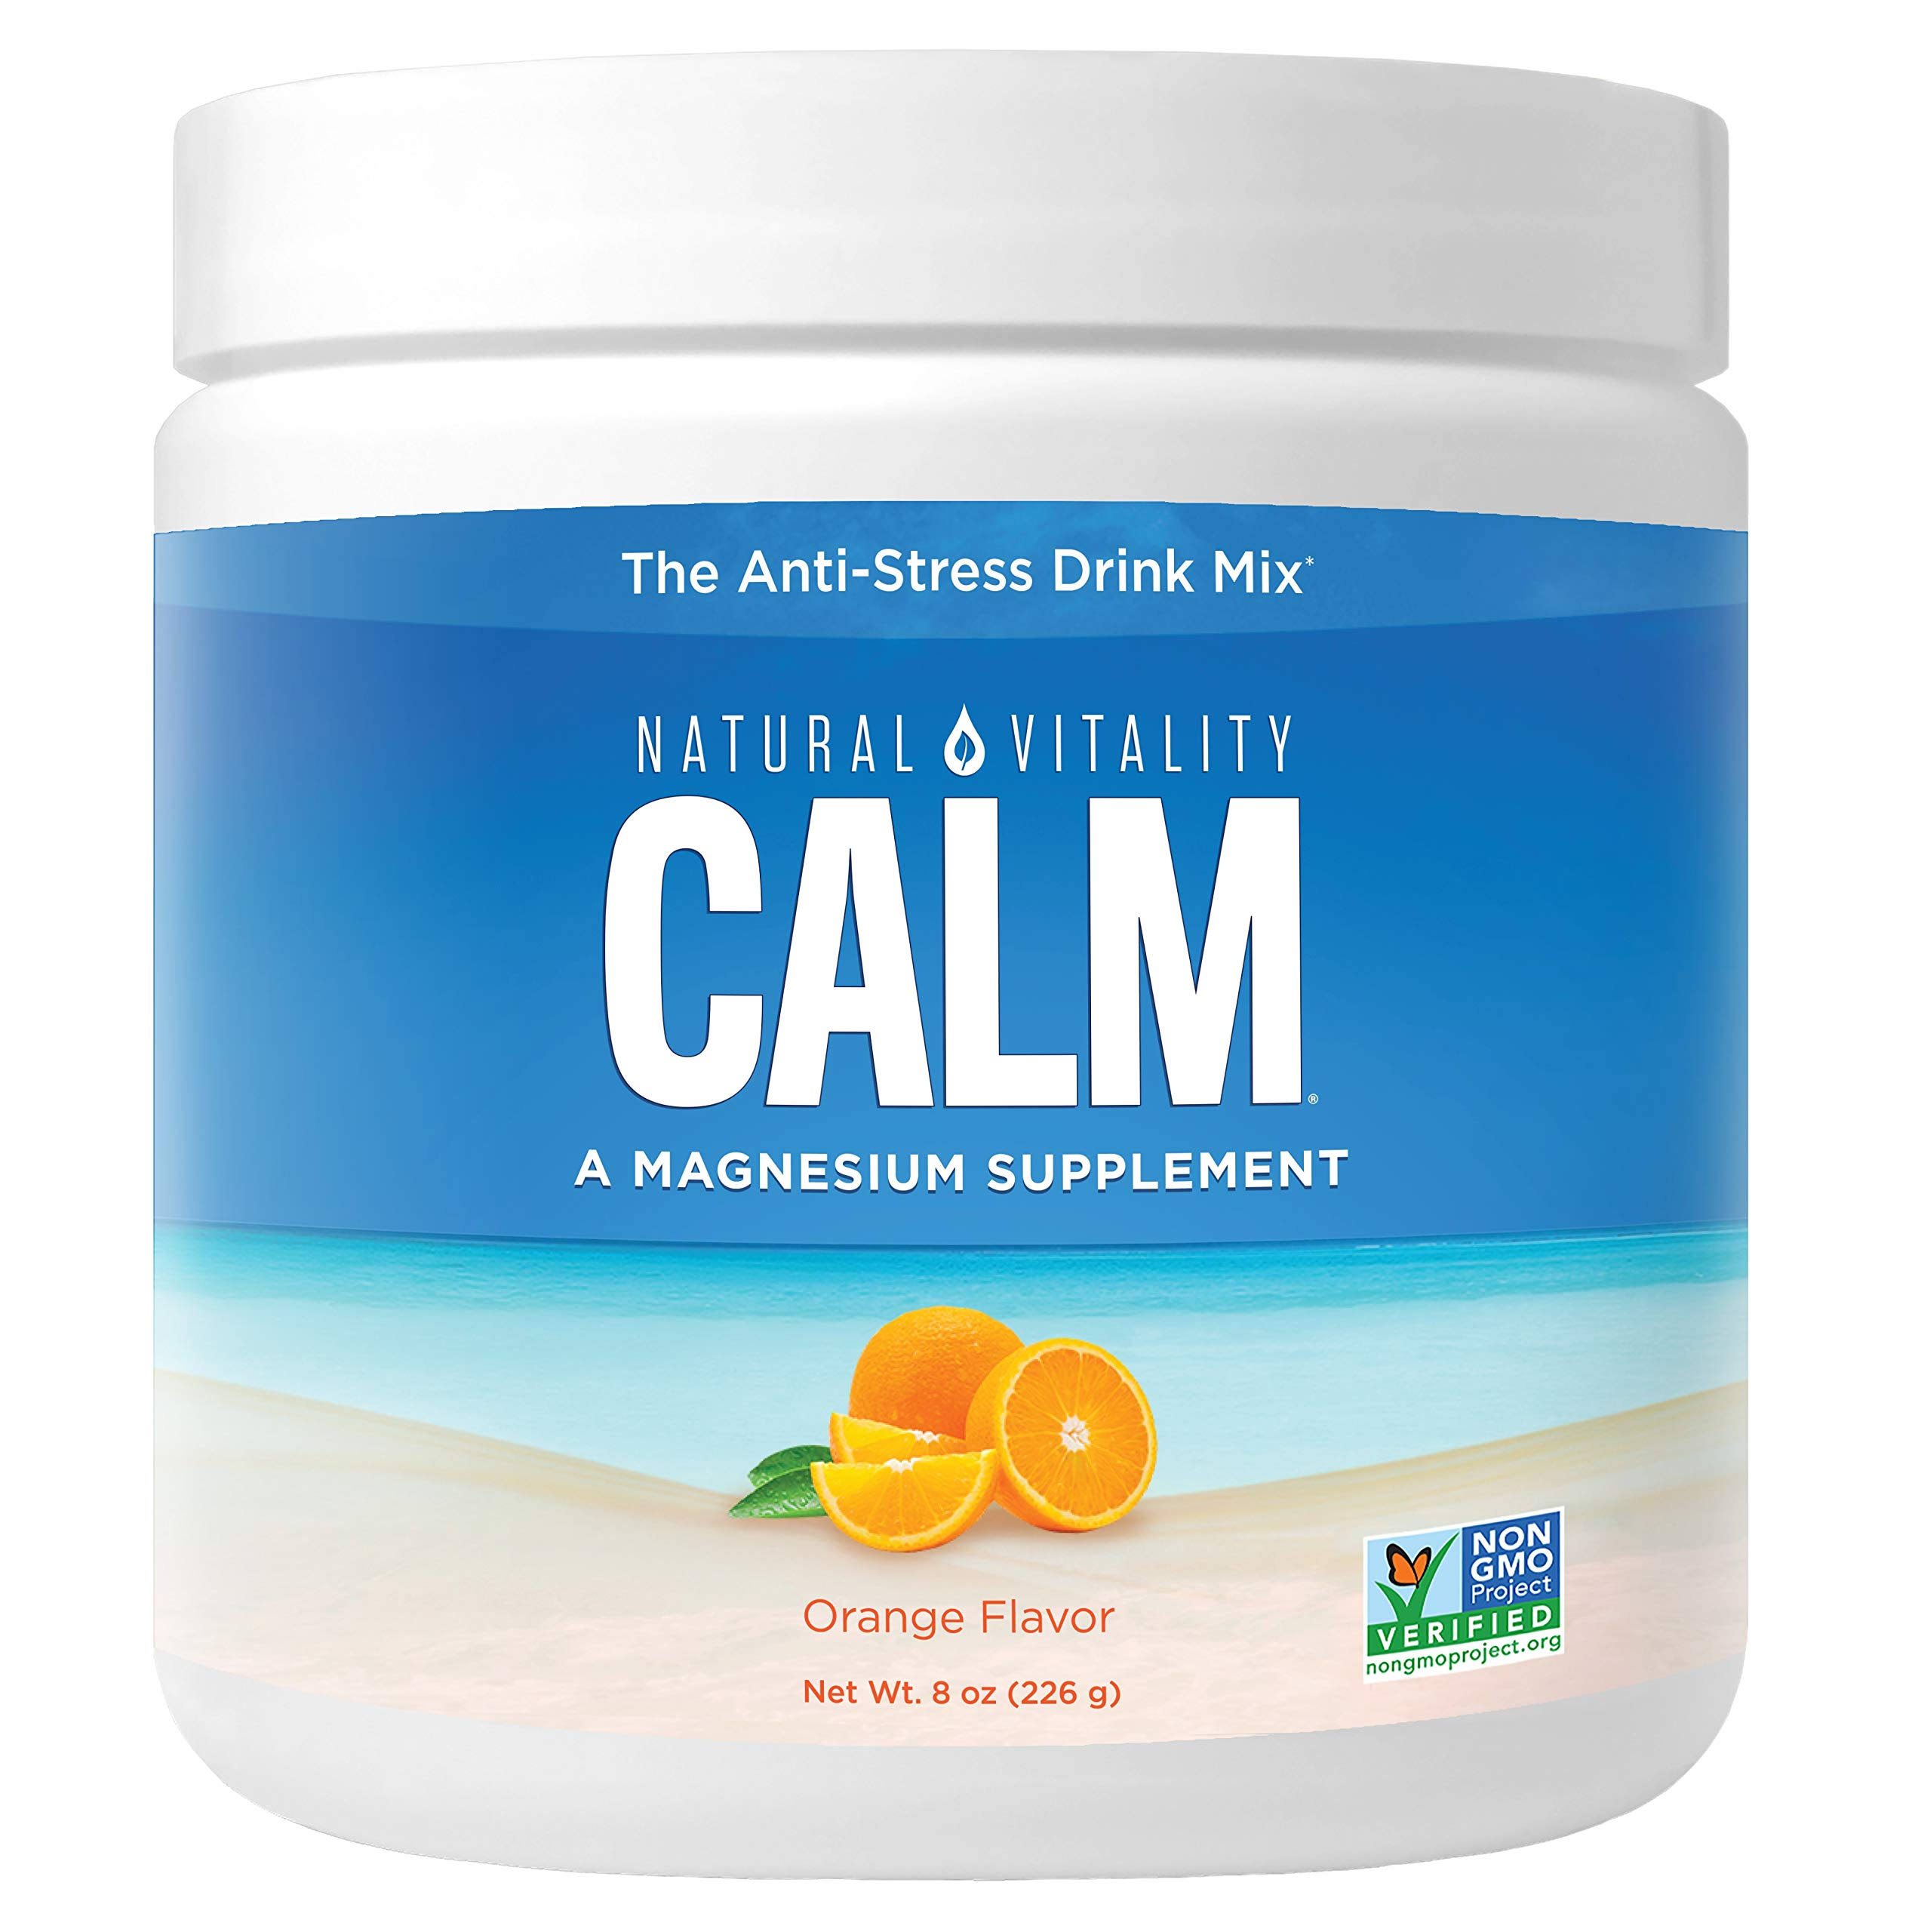 Natural Vitality Calm Anti-Stress Drink Mix, Orange Flavor - 8 oz